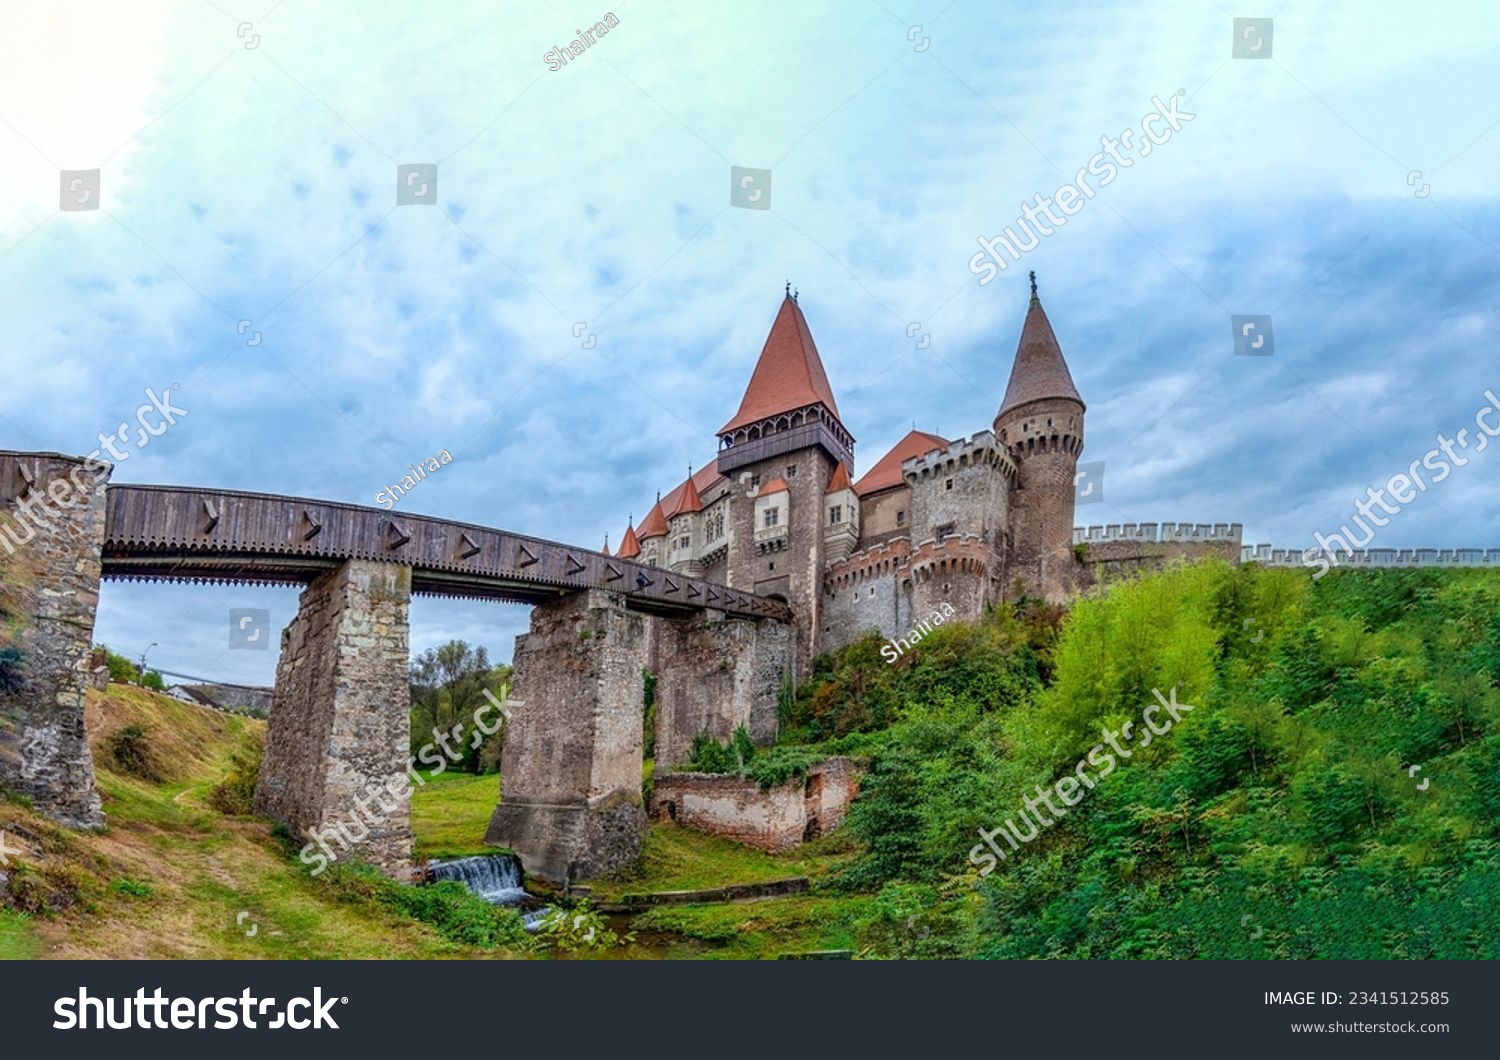 Stone bridge to the old castle. Castle bridge. Medieval castle with stone bridge. Medieval castle bridge #2341512585